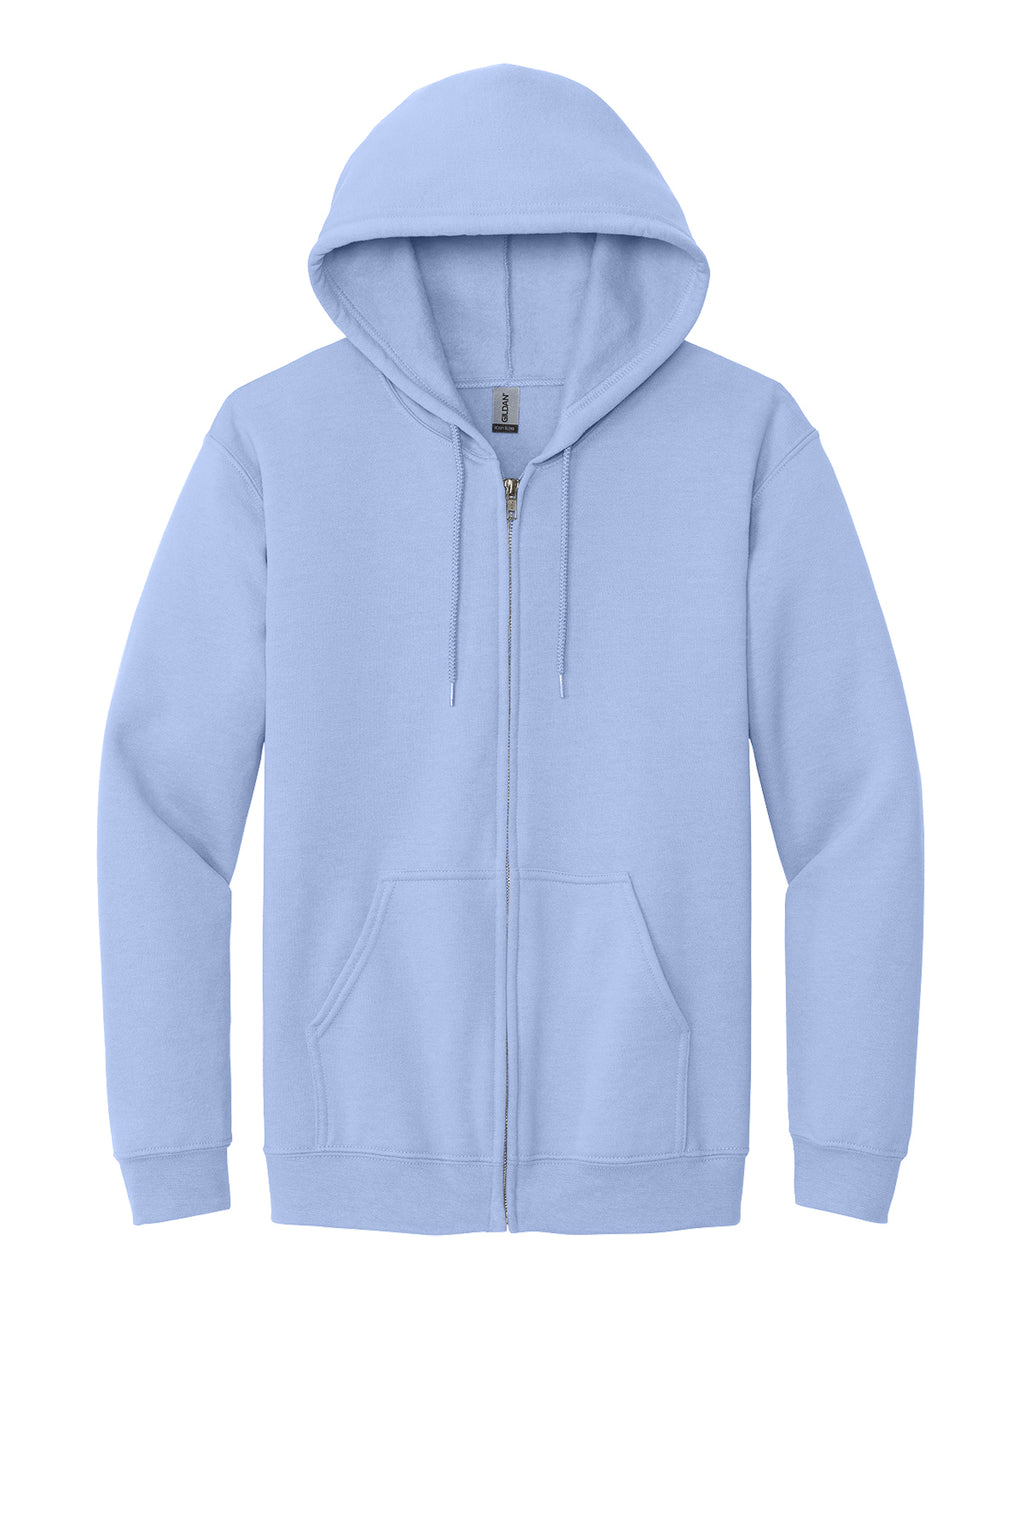 Gildan Full-Zip Hooded Sweatshirt Mens/Unisex Hoodies Carolina Blue